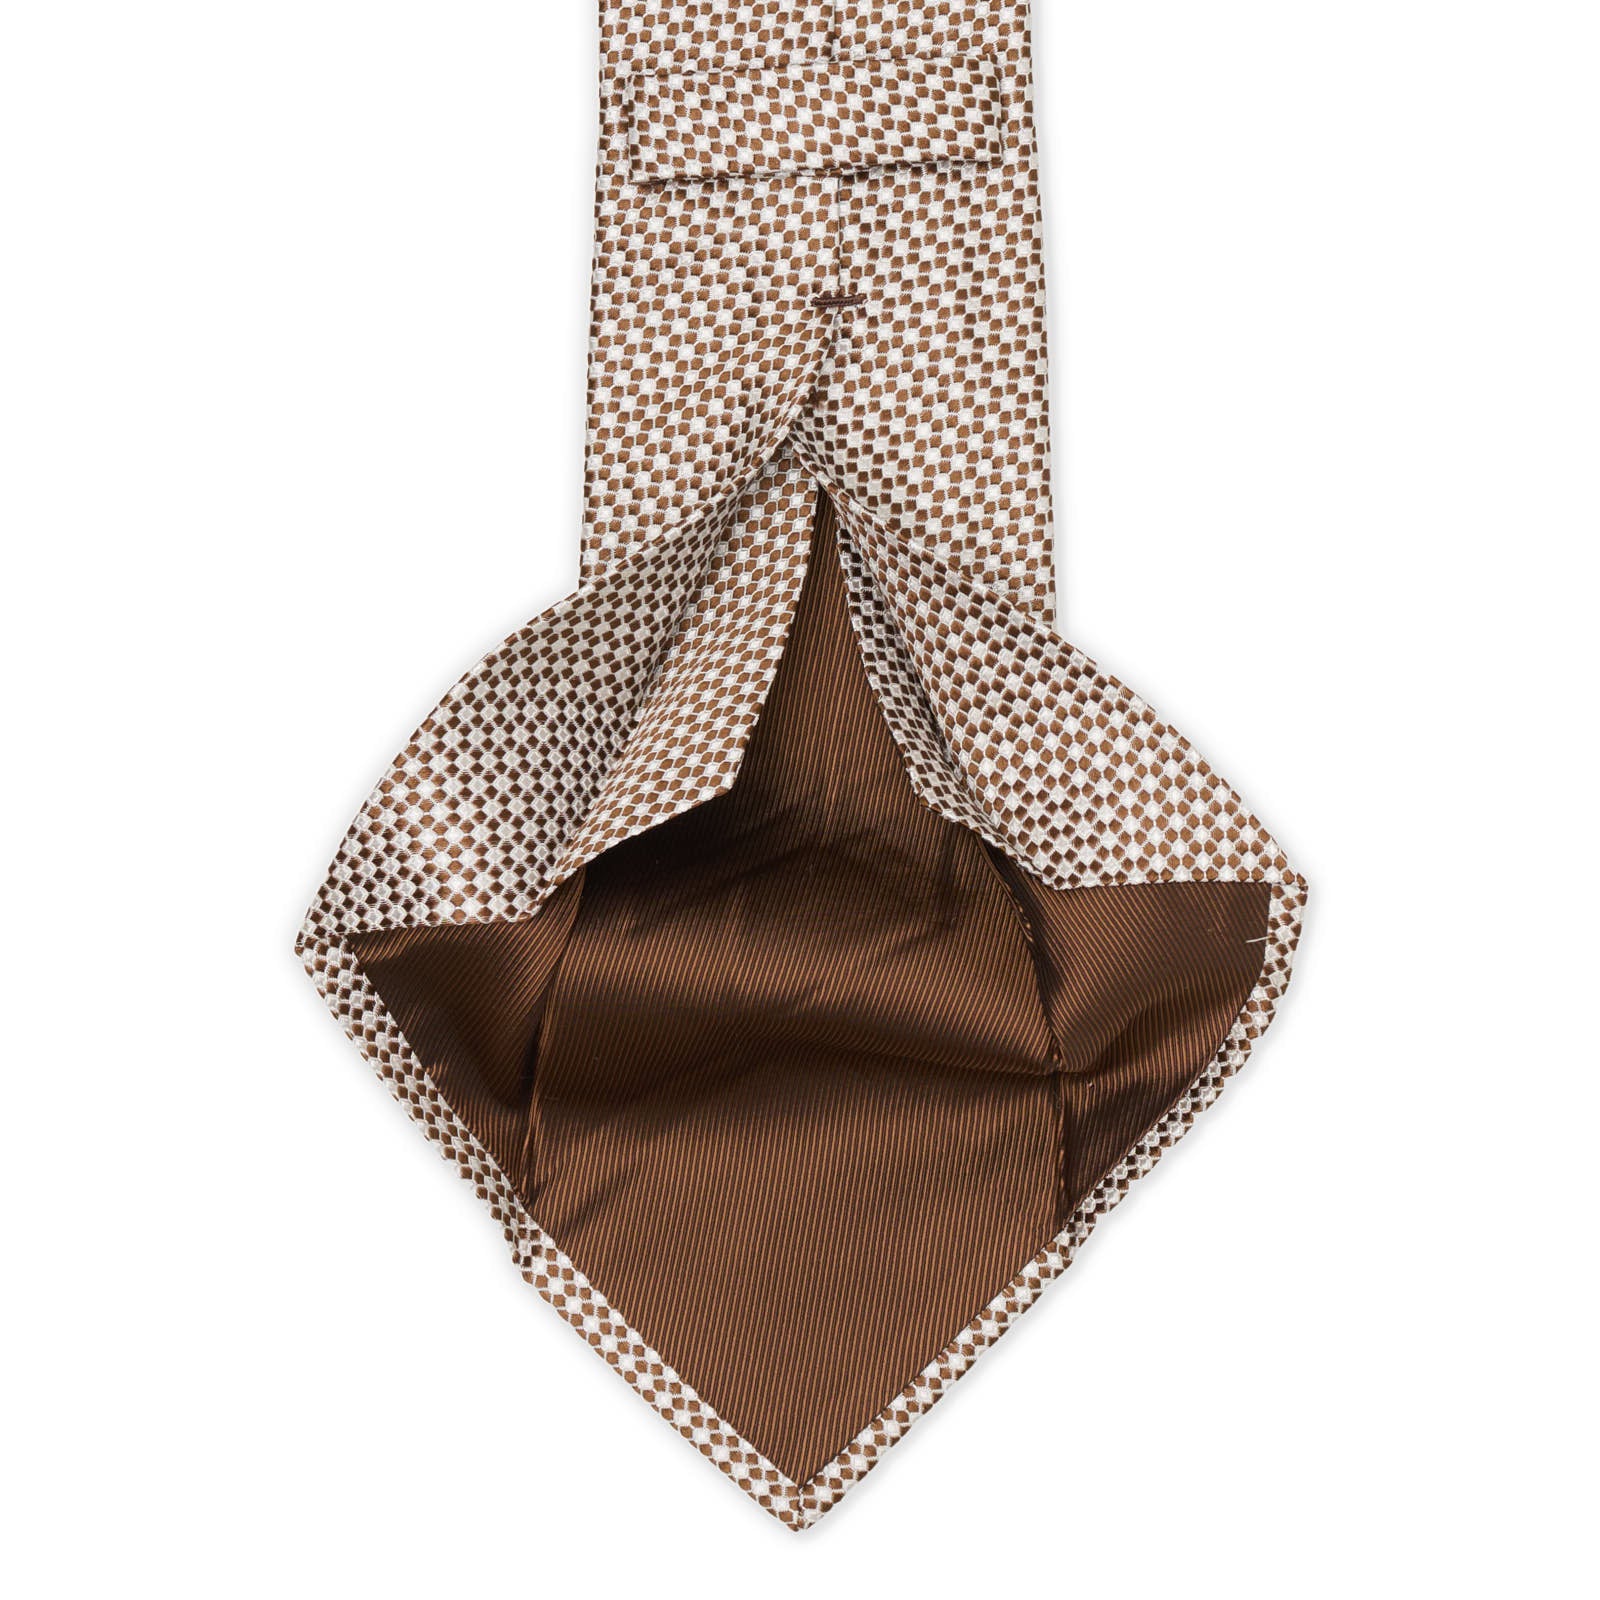 MATTABISCH of for VANNUCCI Brown and White Geometric Seven Fold Silk Tie NEW